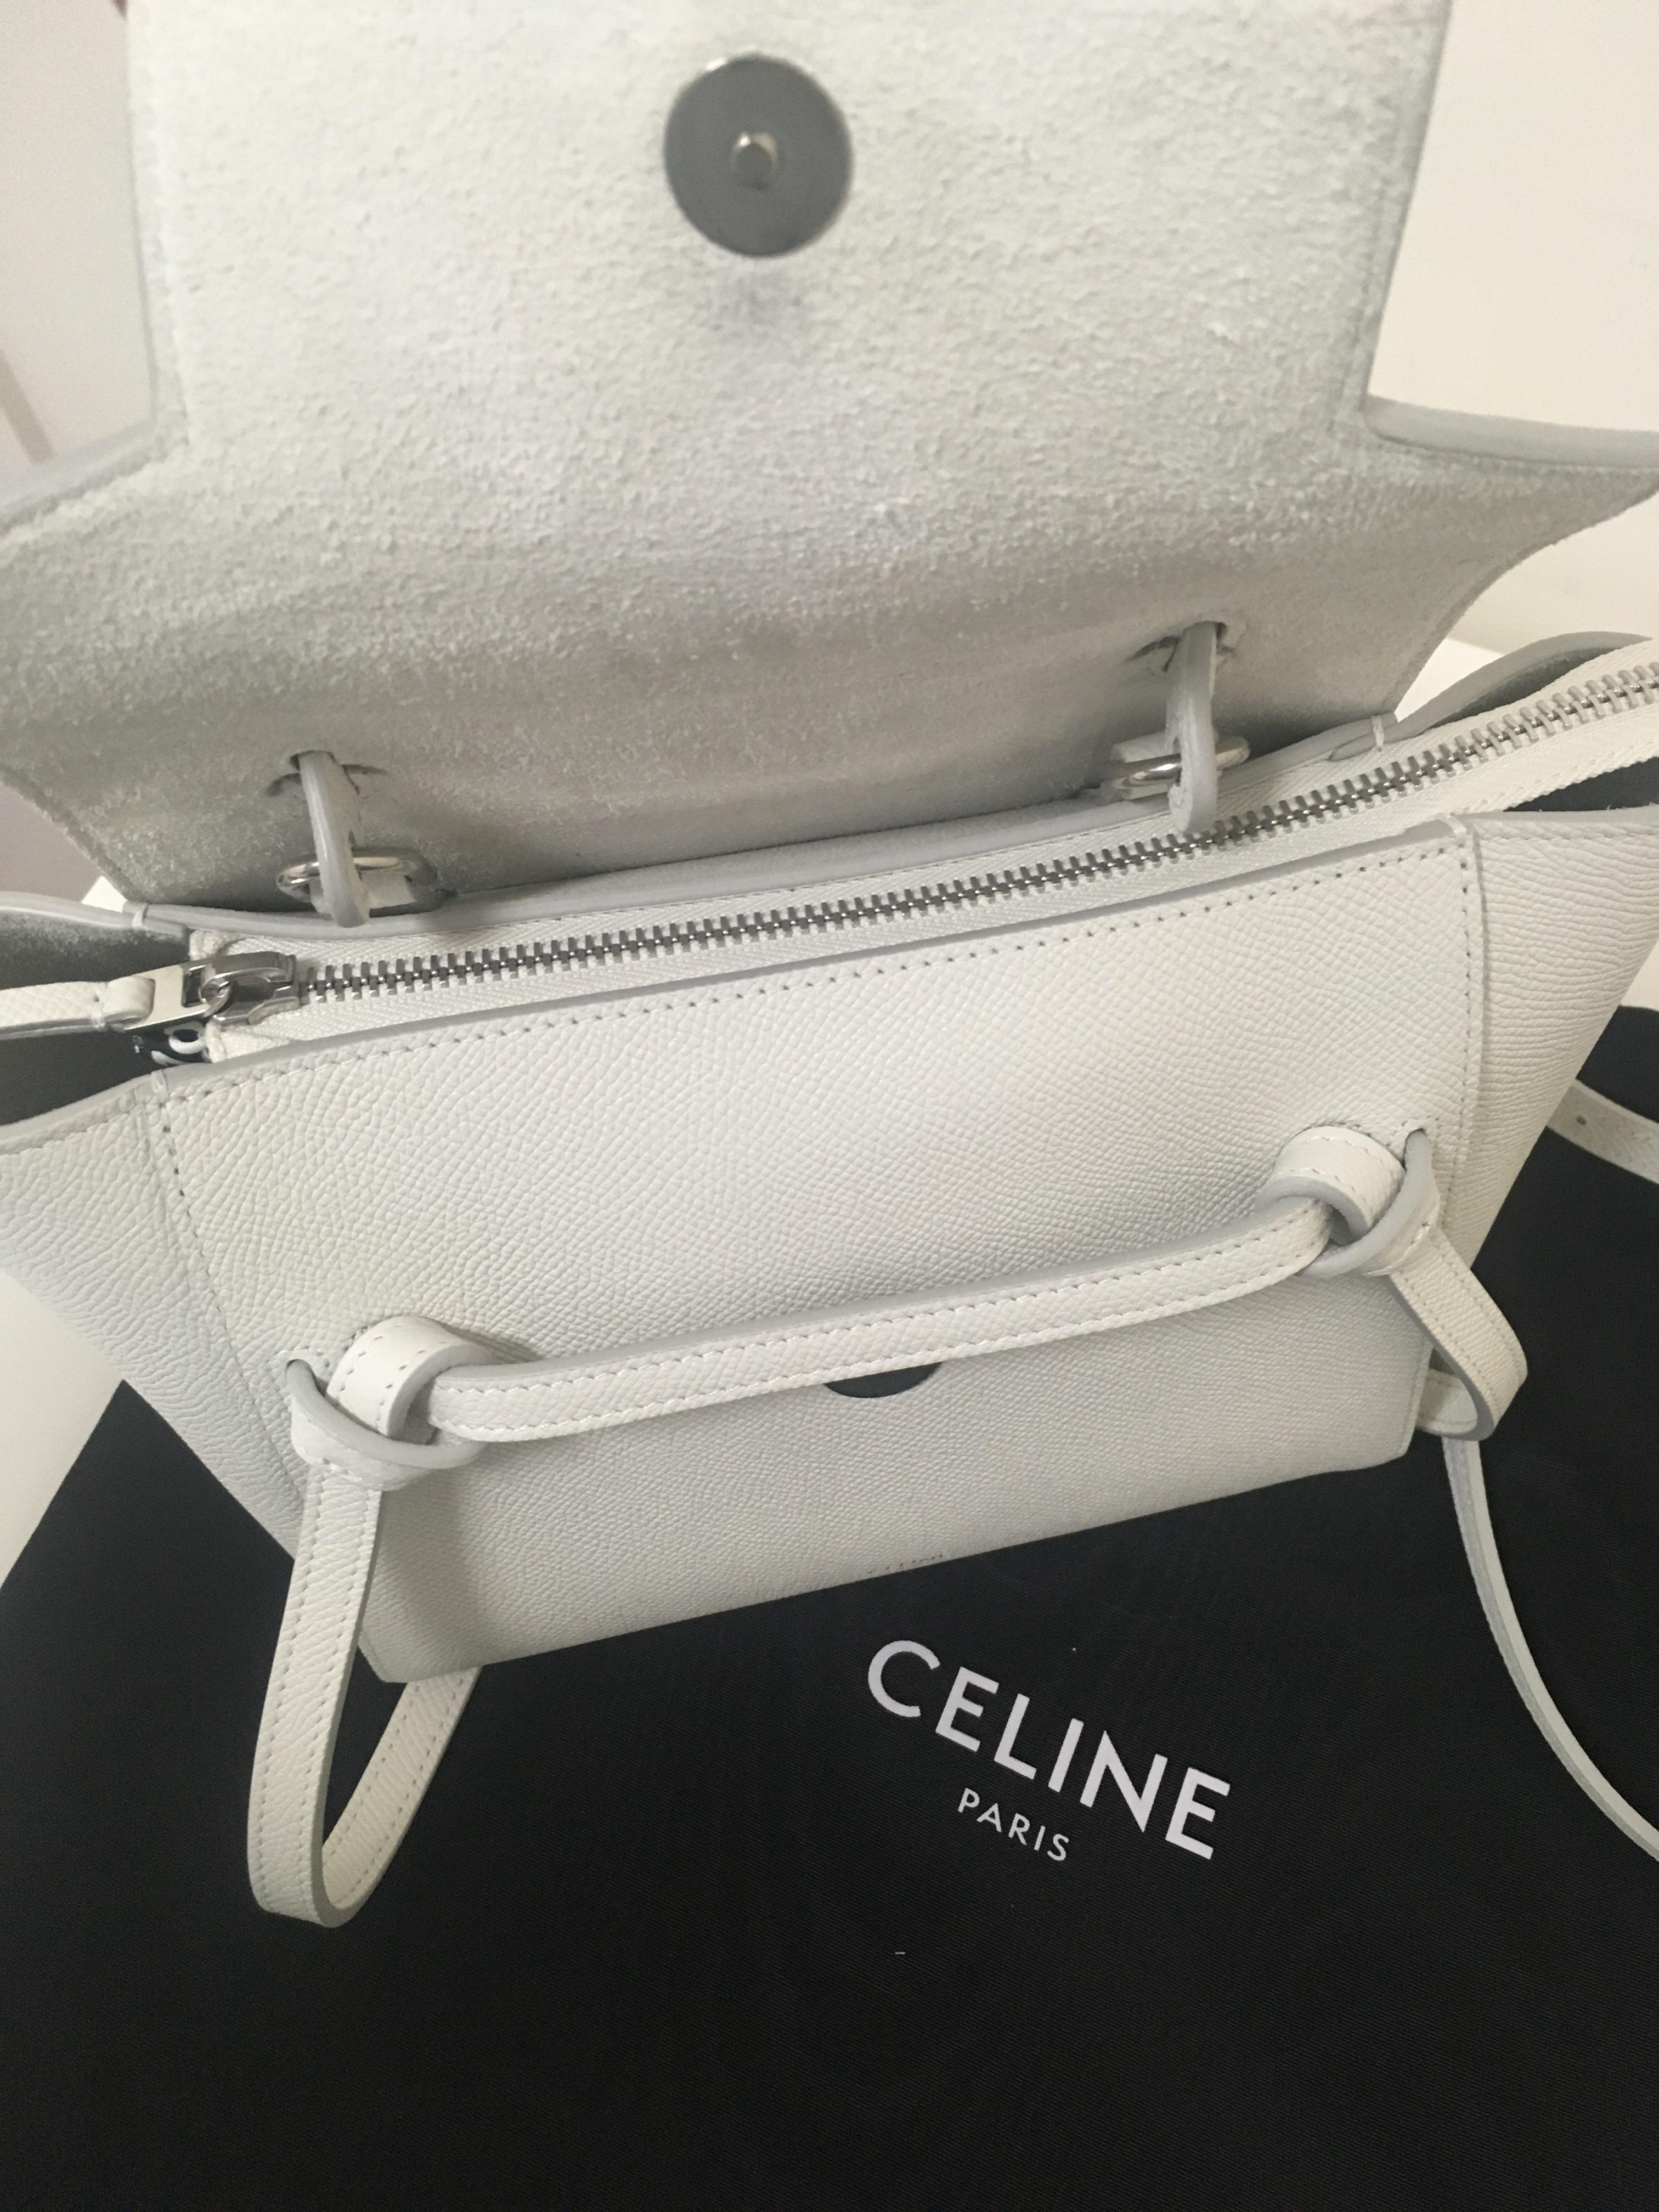 Céline Nano Belt Bag // FIRST IMPRESSION & WHAT FITS